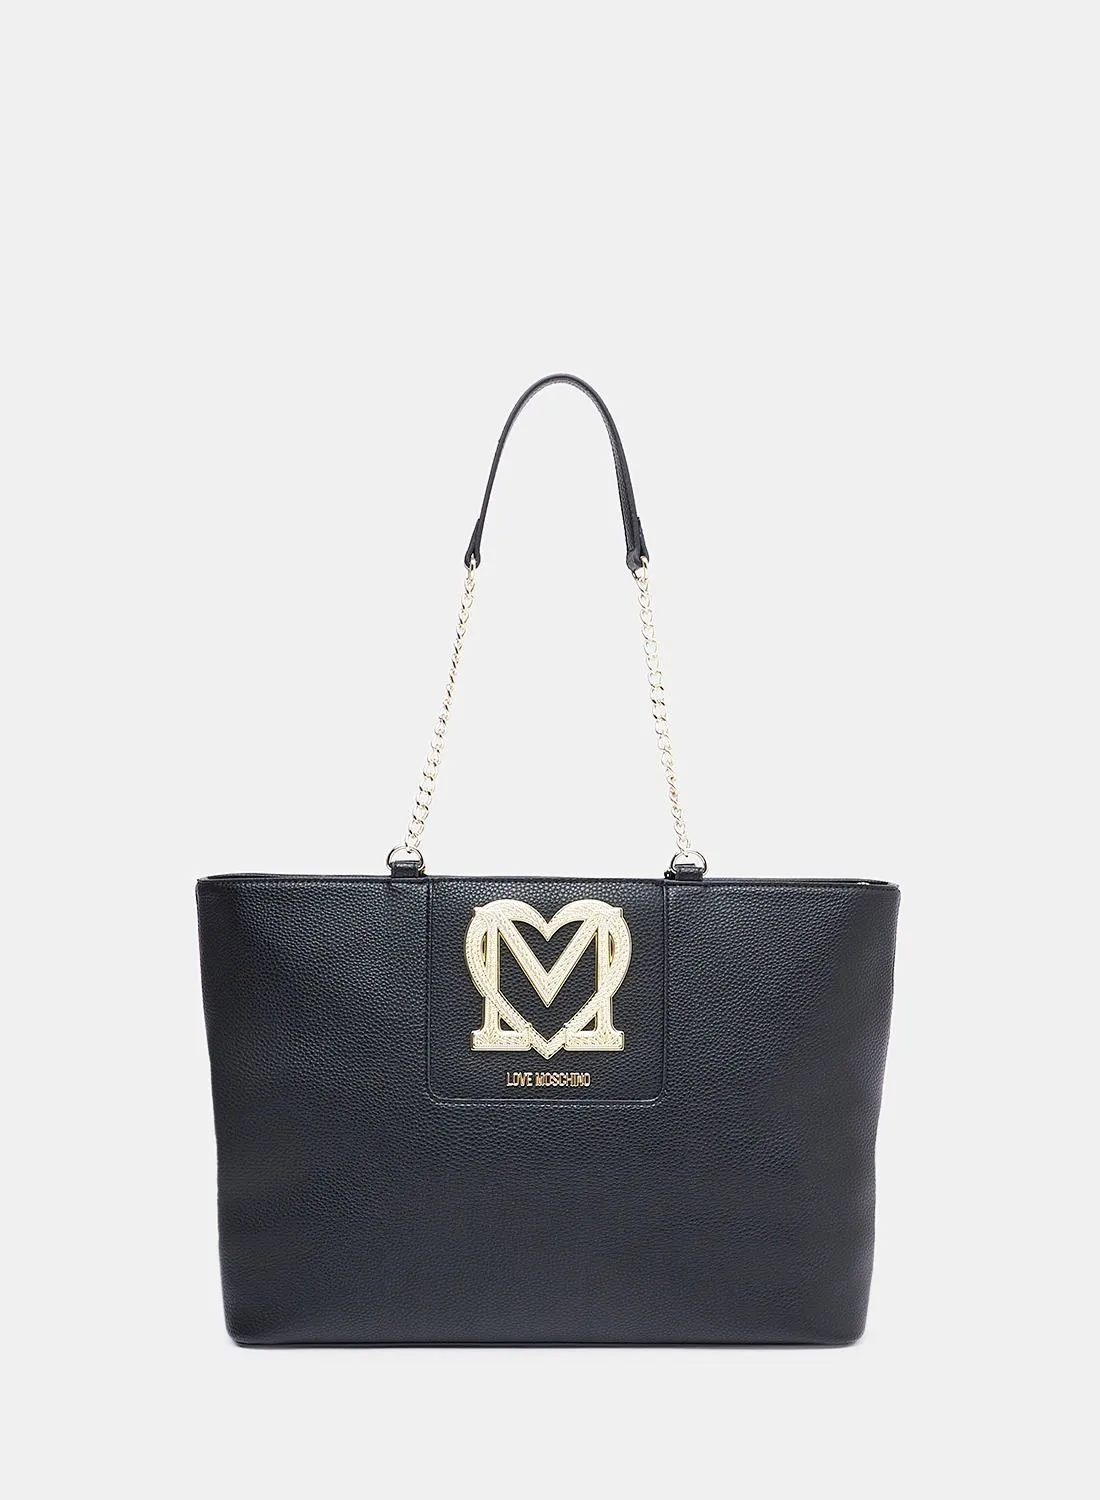 Love Moschino Monogram Tote Bag